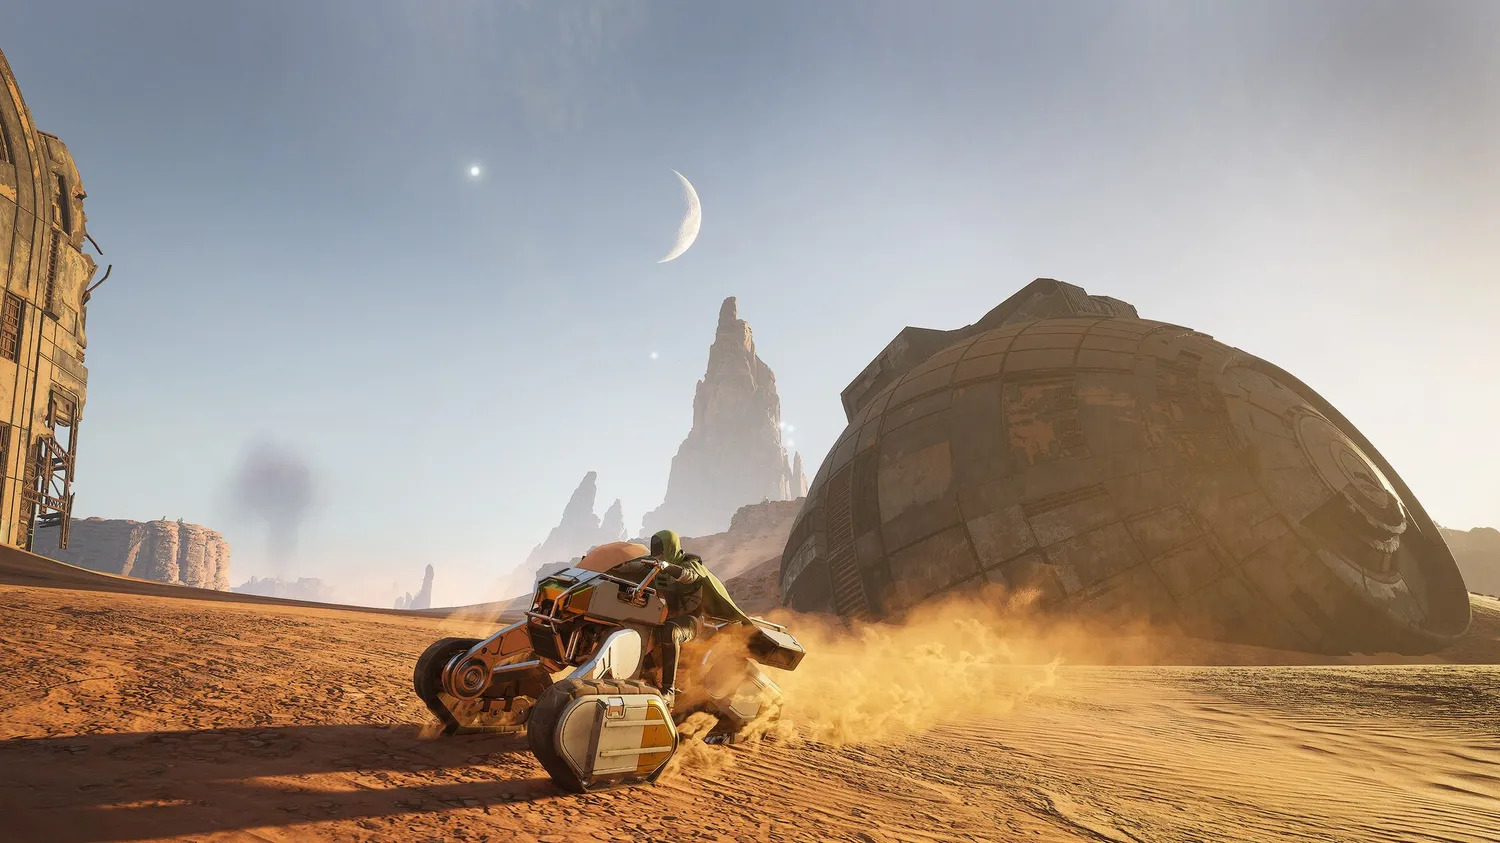 A new gameplay trailer has been released for Dune: Awakening